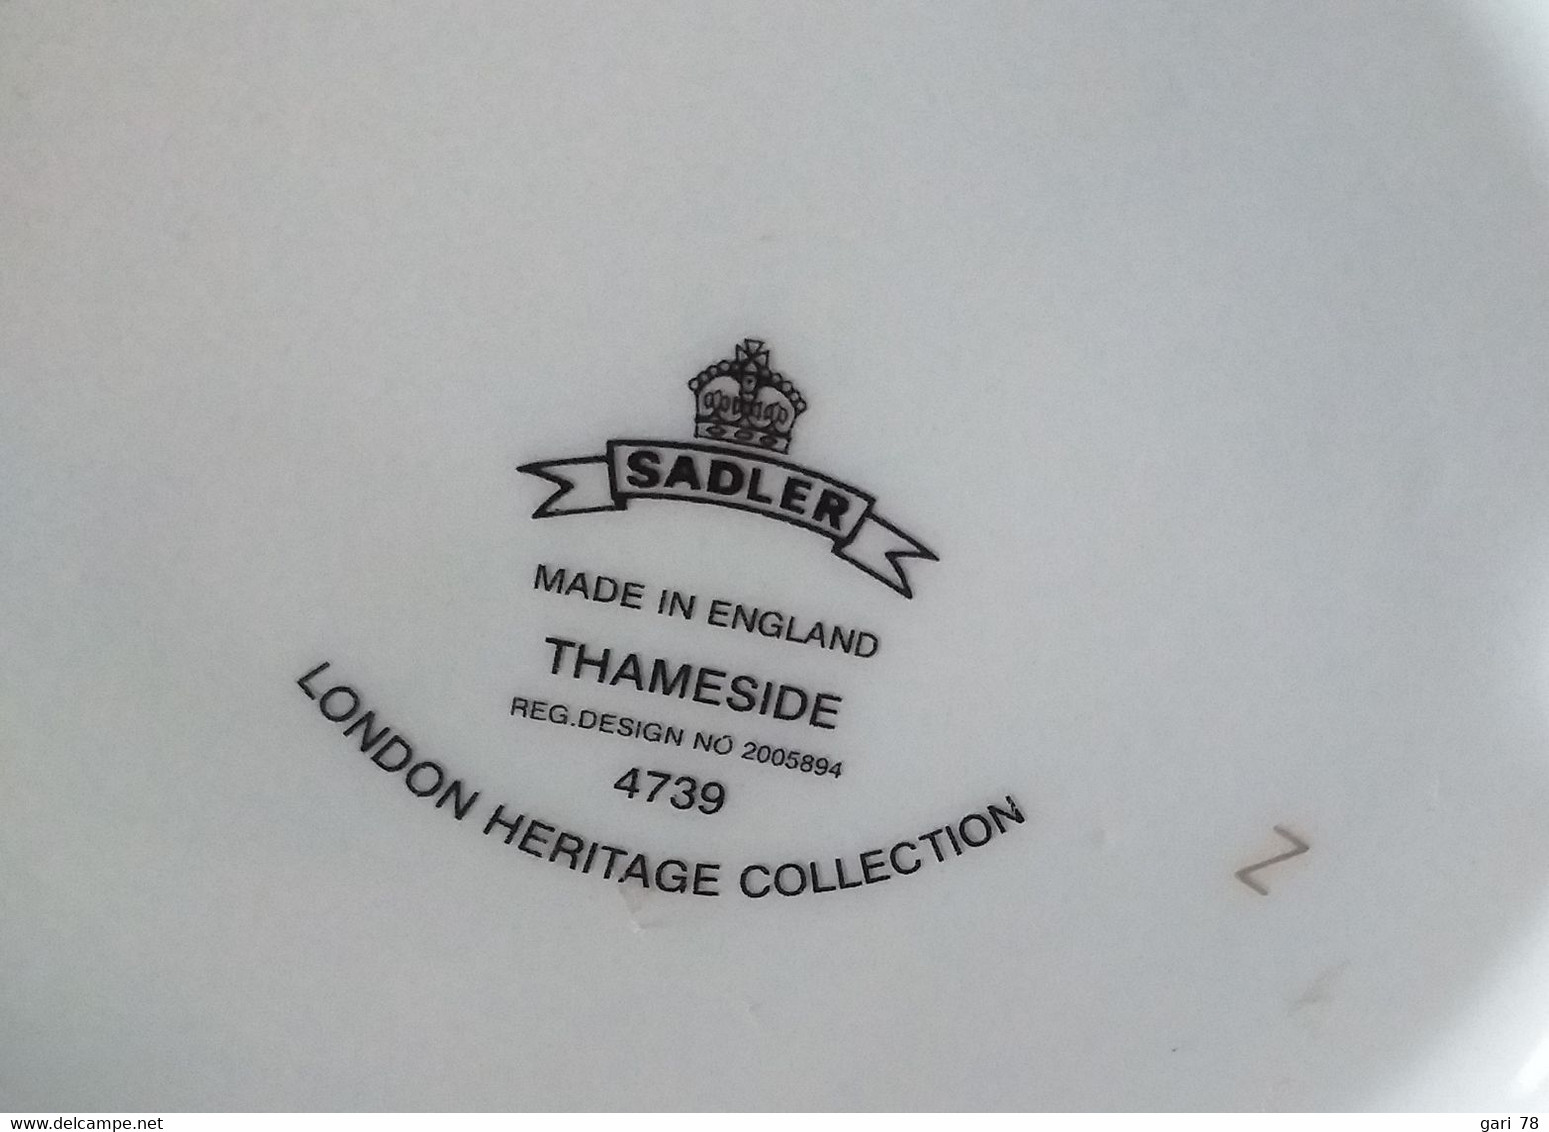 THEIERE Anglaise SADLER, THAMESIDE, London Heritage Collection - Motif Garde Anglaise - Sadler